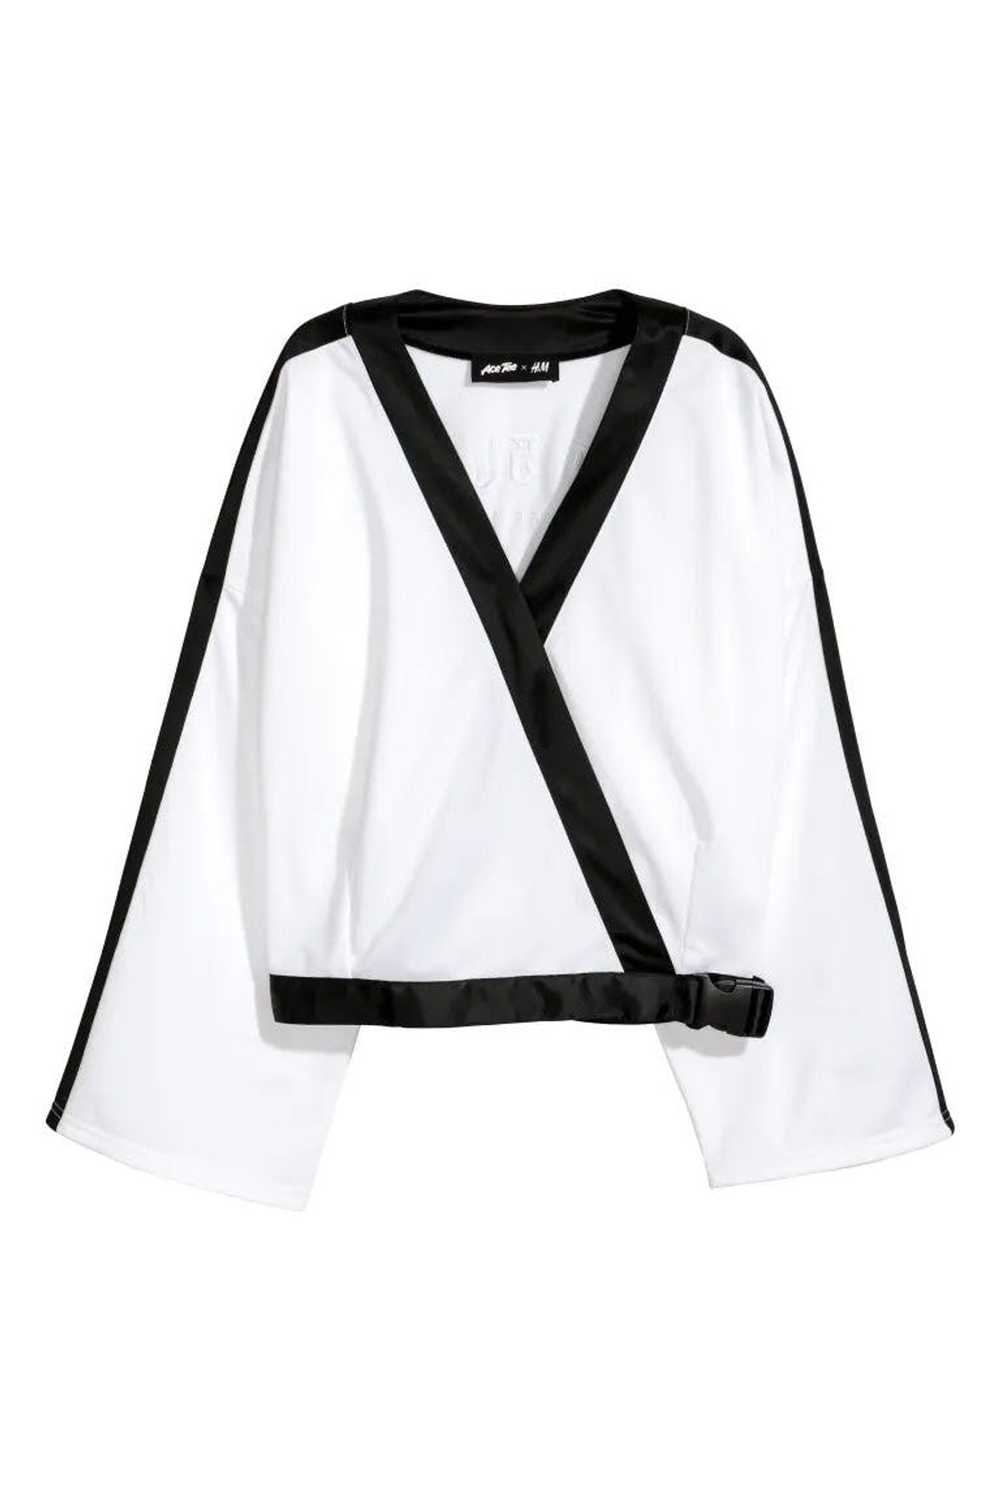 Designer × H&M × Streetwear Ace Tee X H&M kimono - image 1